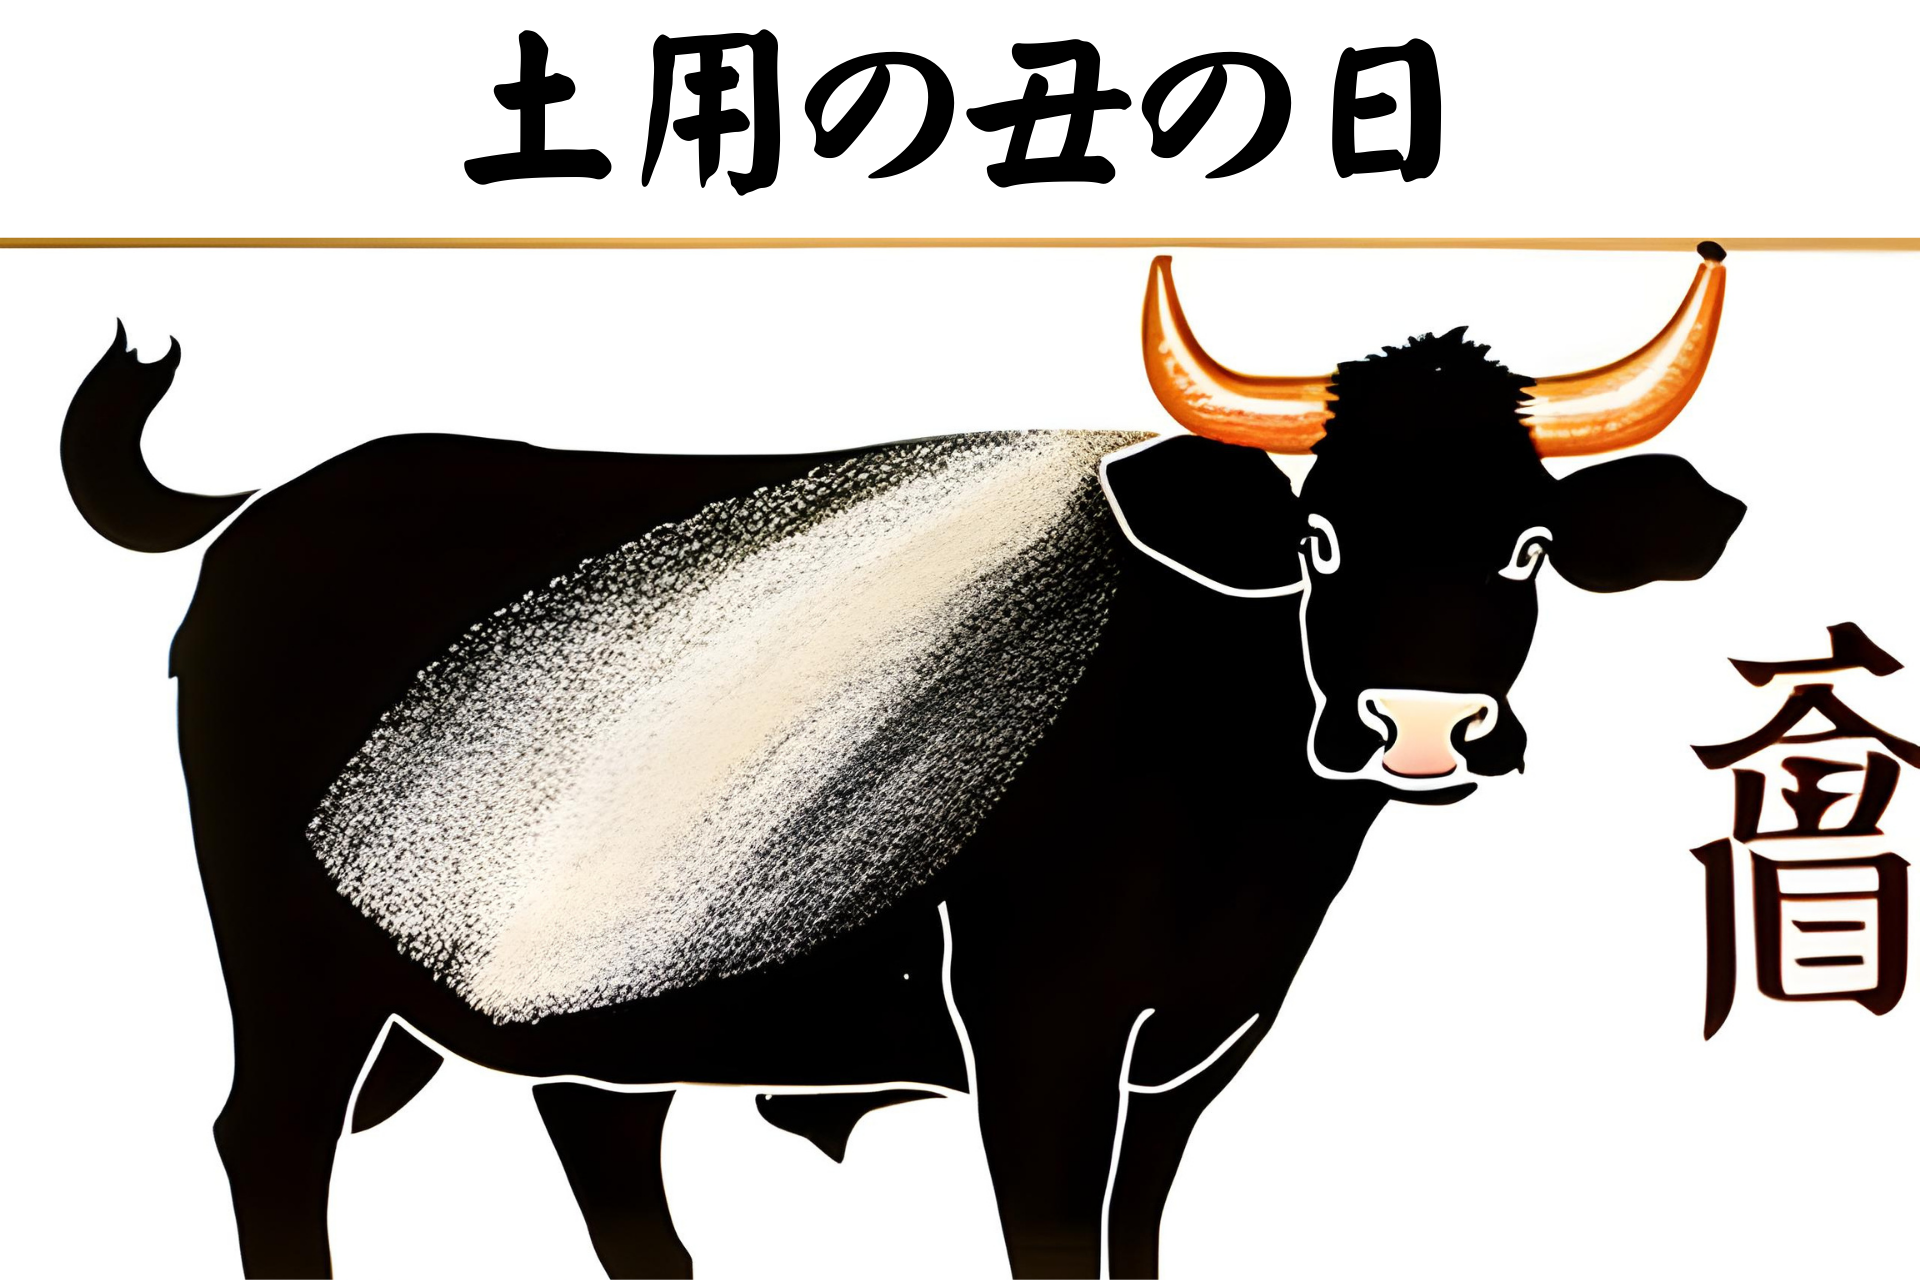 Cow standing beneath the kanji 土用の丑の日